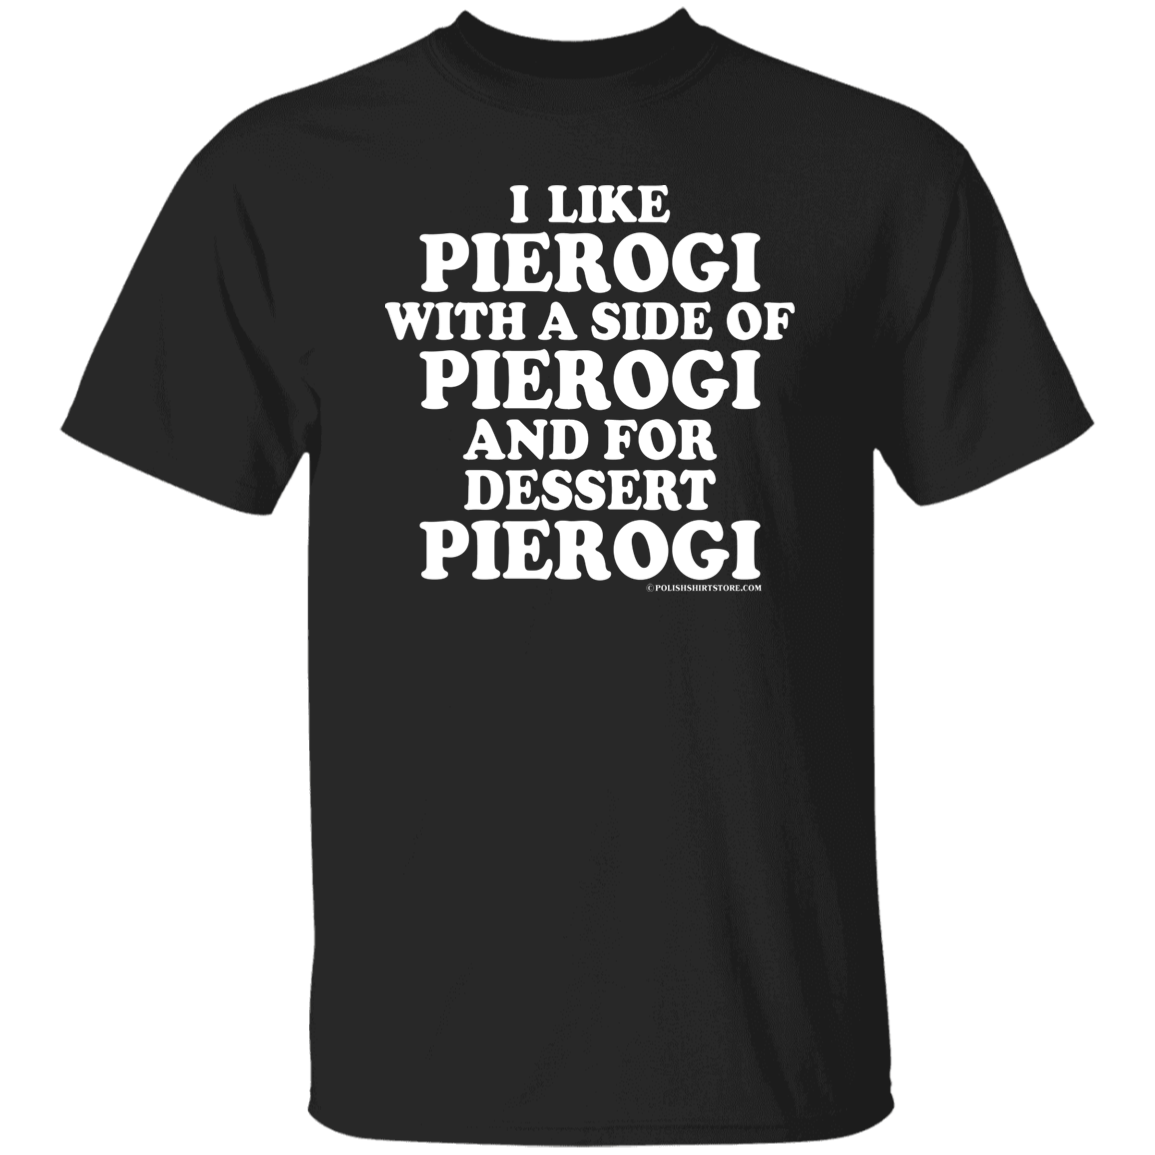 I Like Pierogi With A Side Of Pierogi Apparel CustomCat G500 5.3 oz. T-Shirt Black S